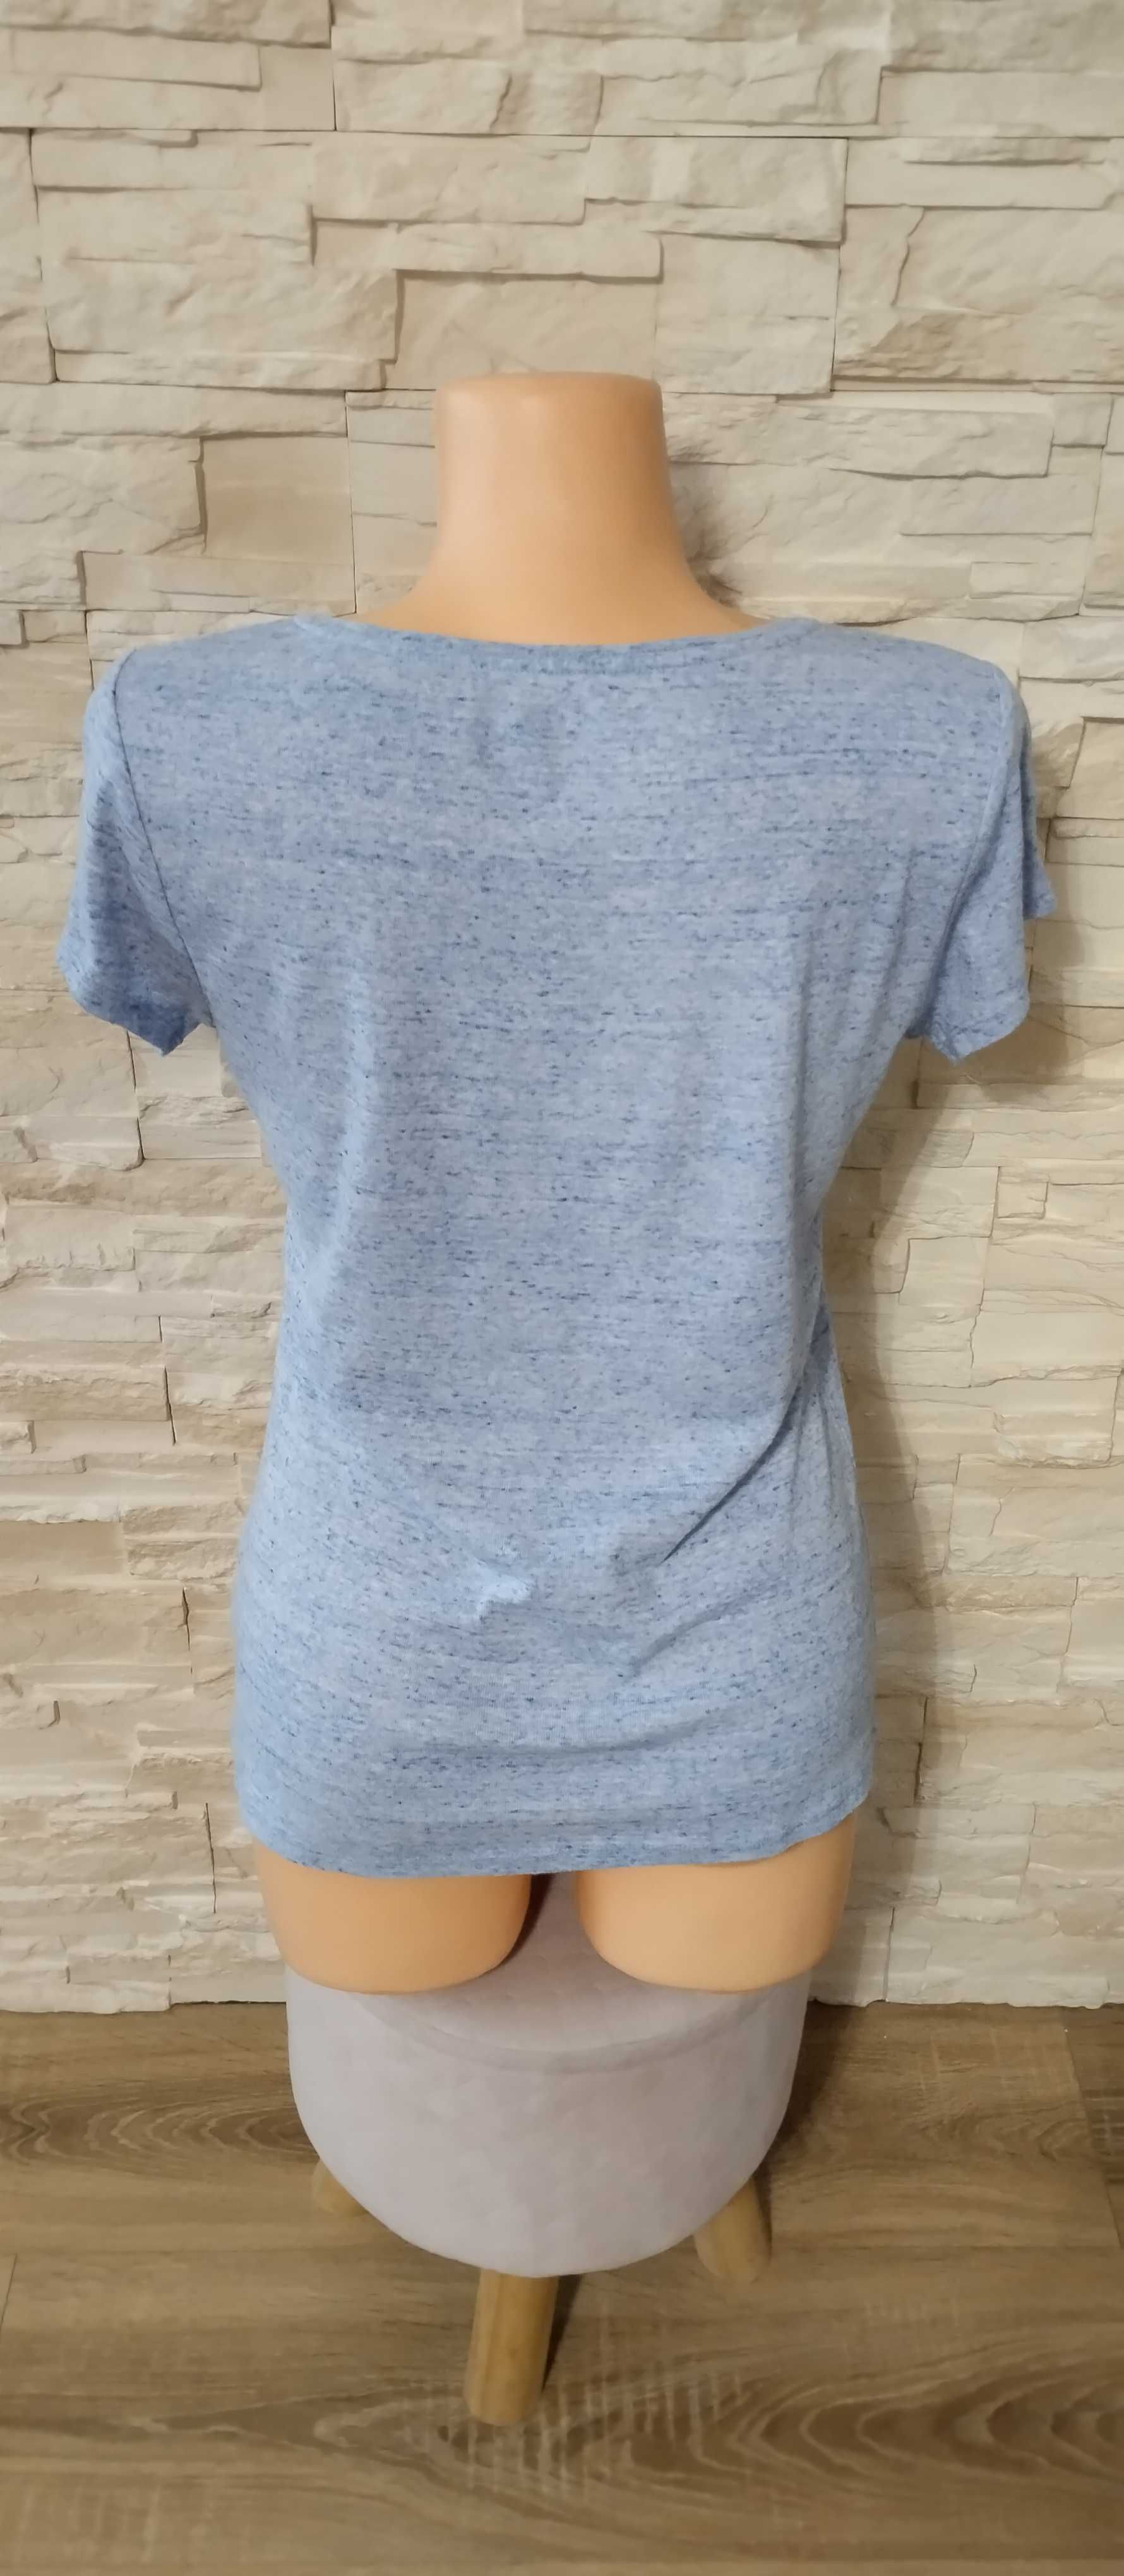 T-shirt damski błękitny XL/42 Papaya